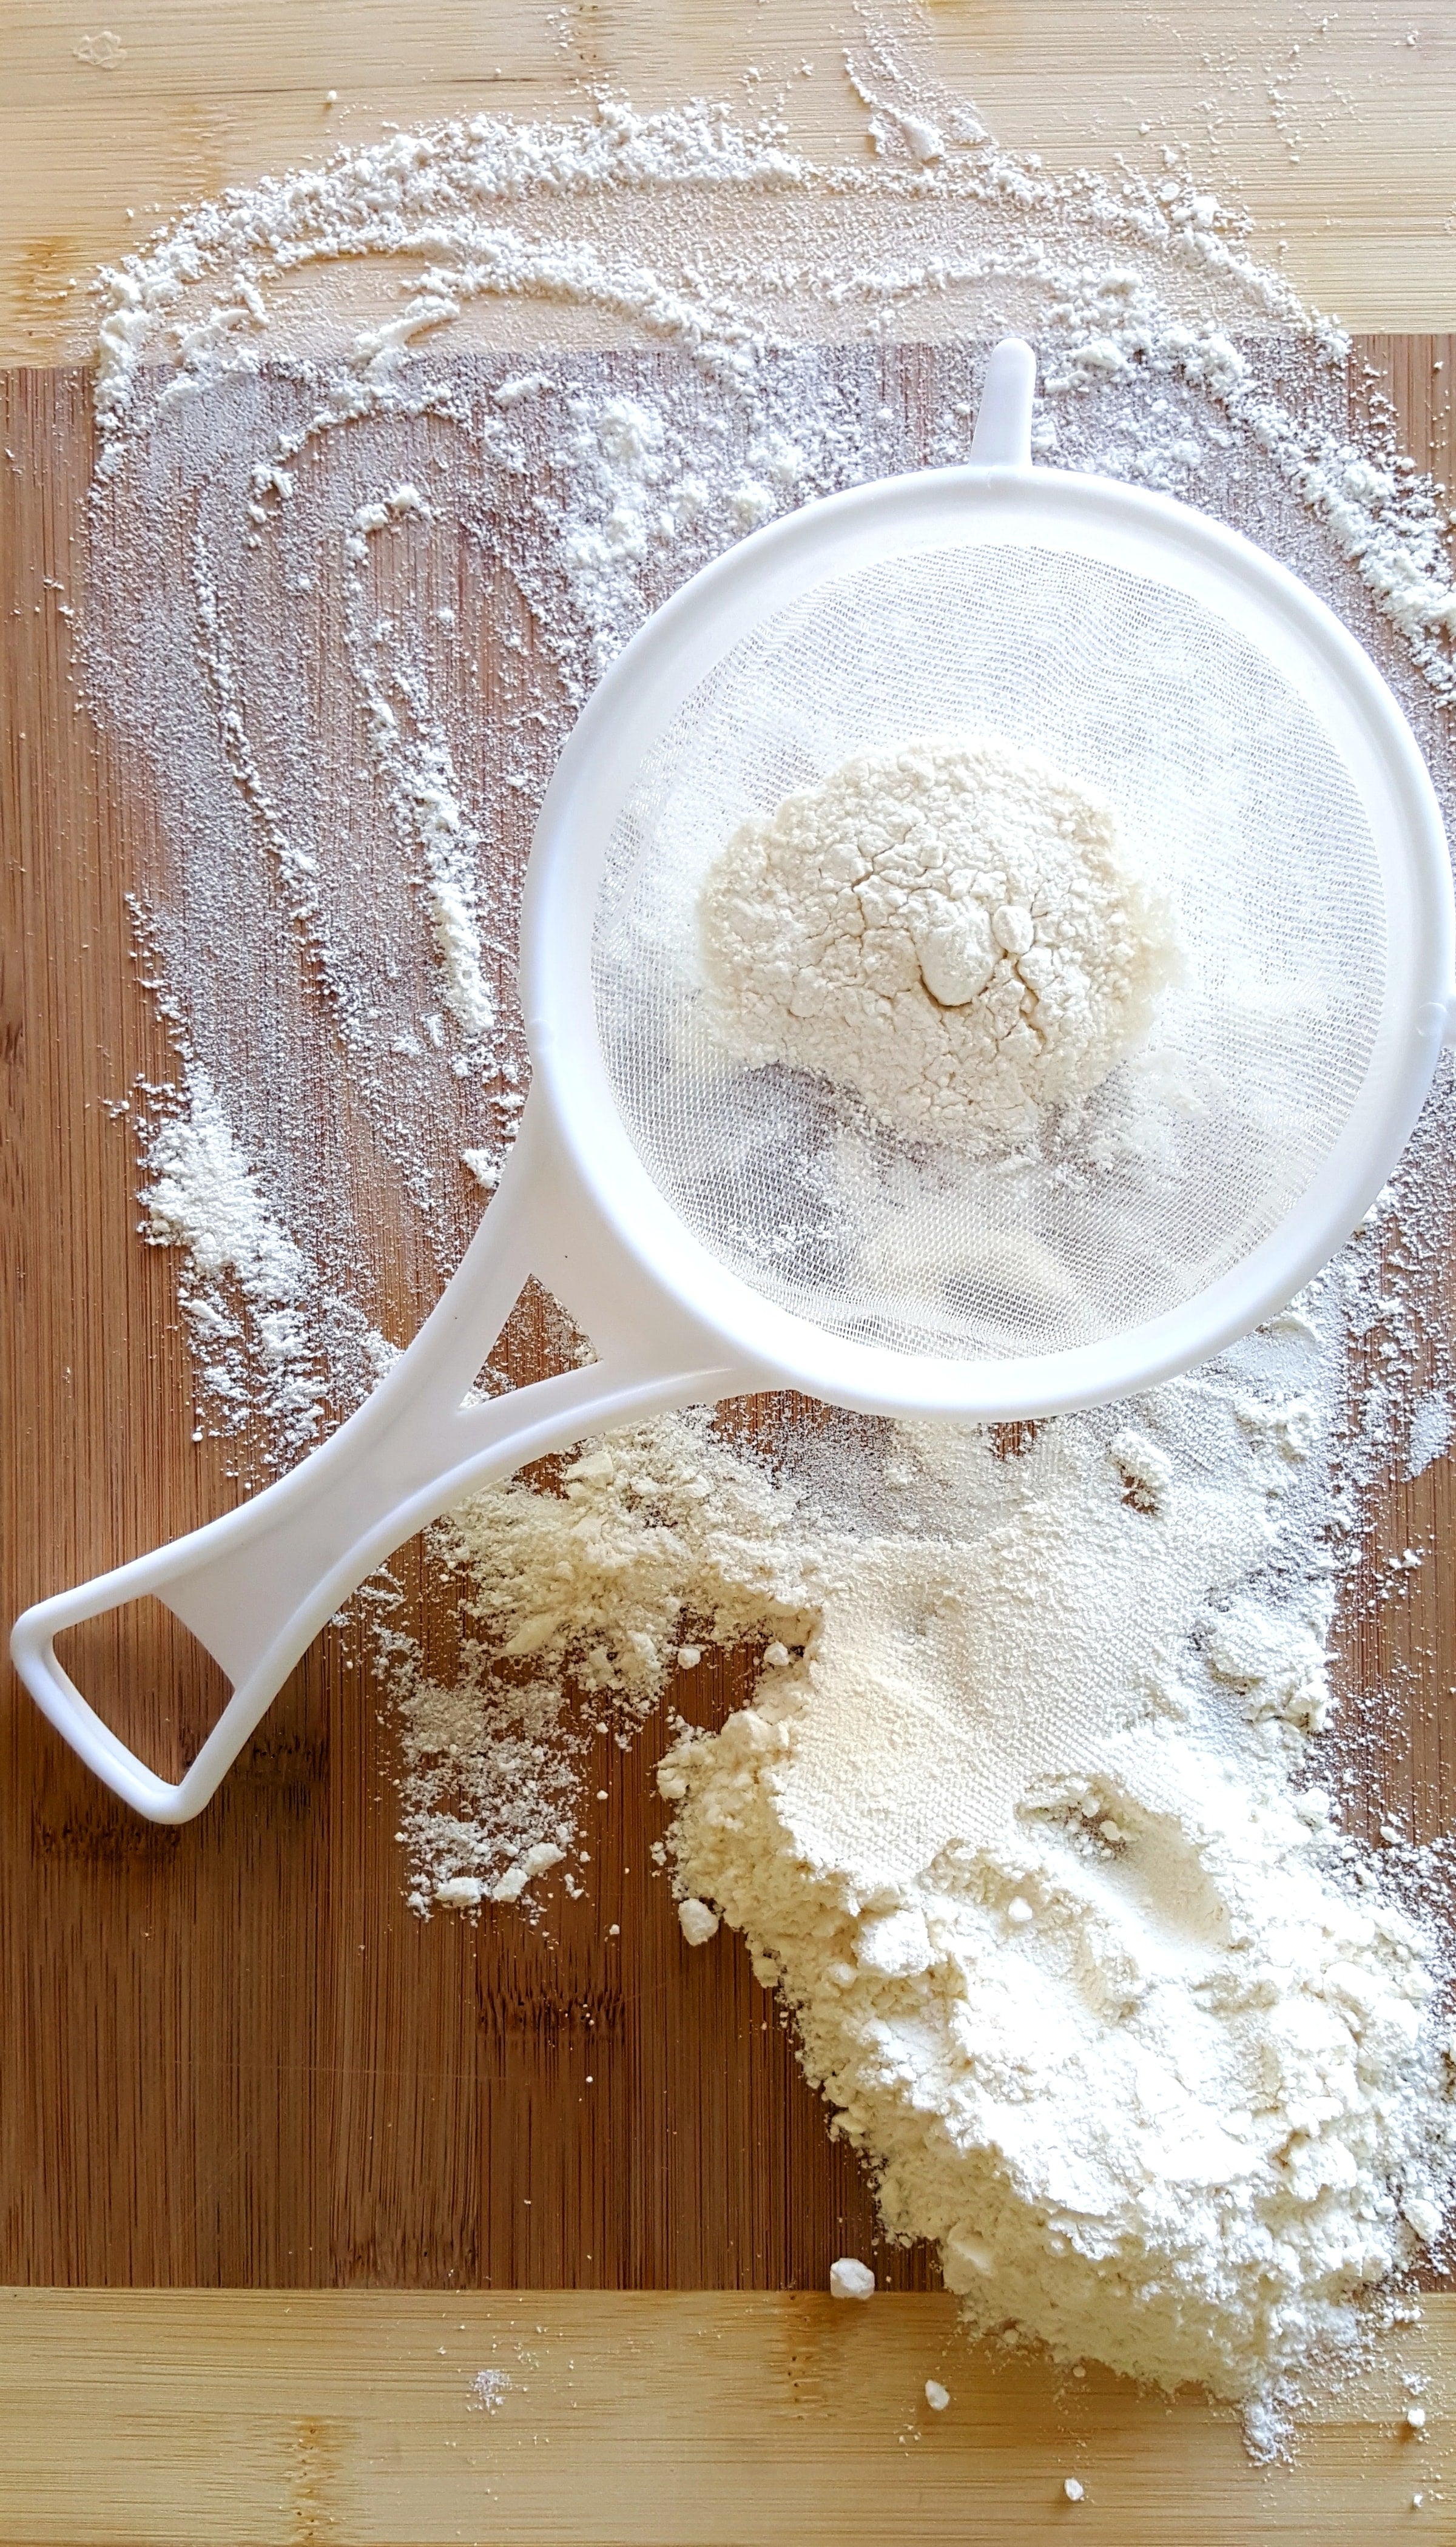 chickpea flour